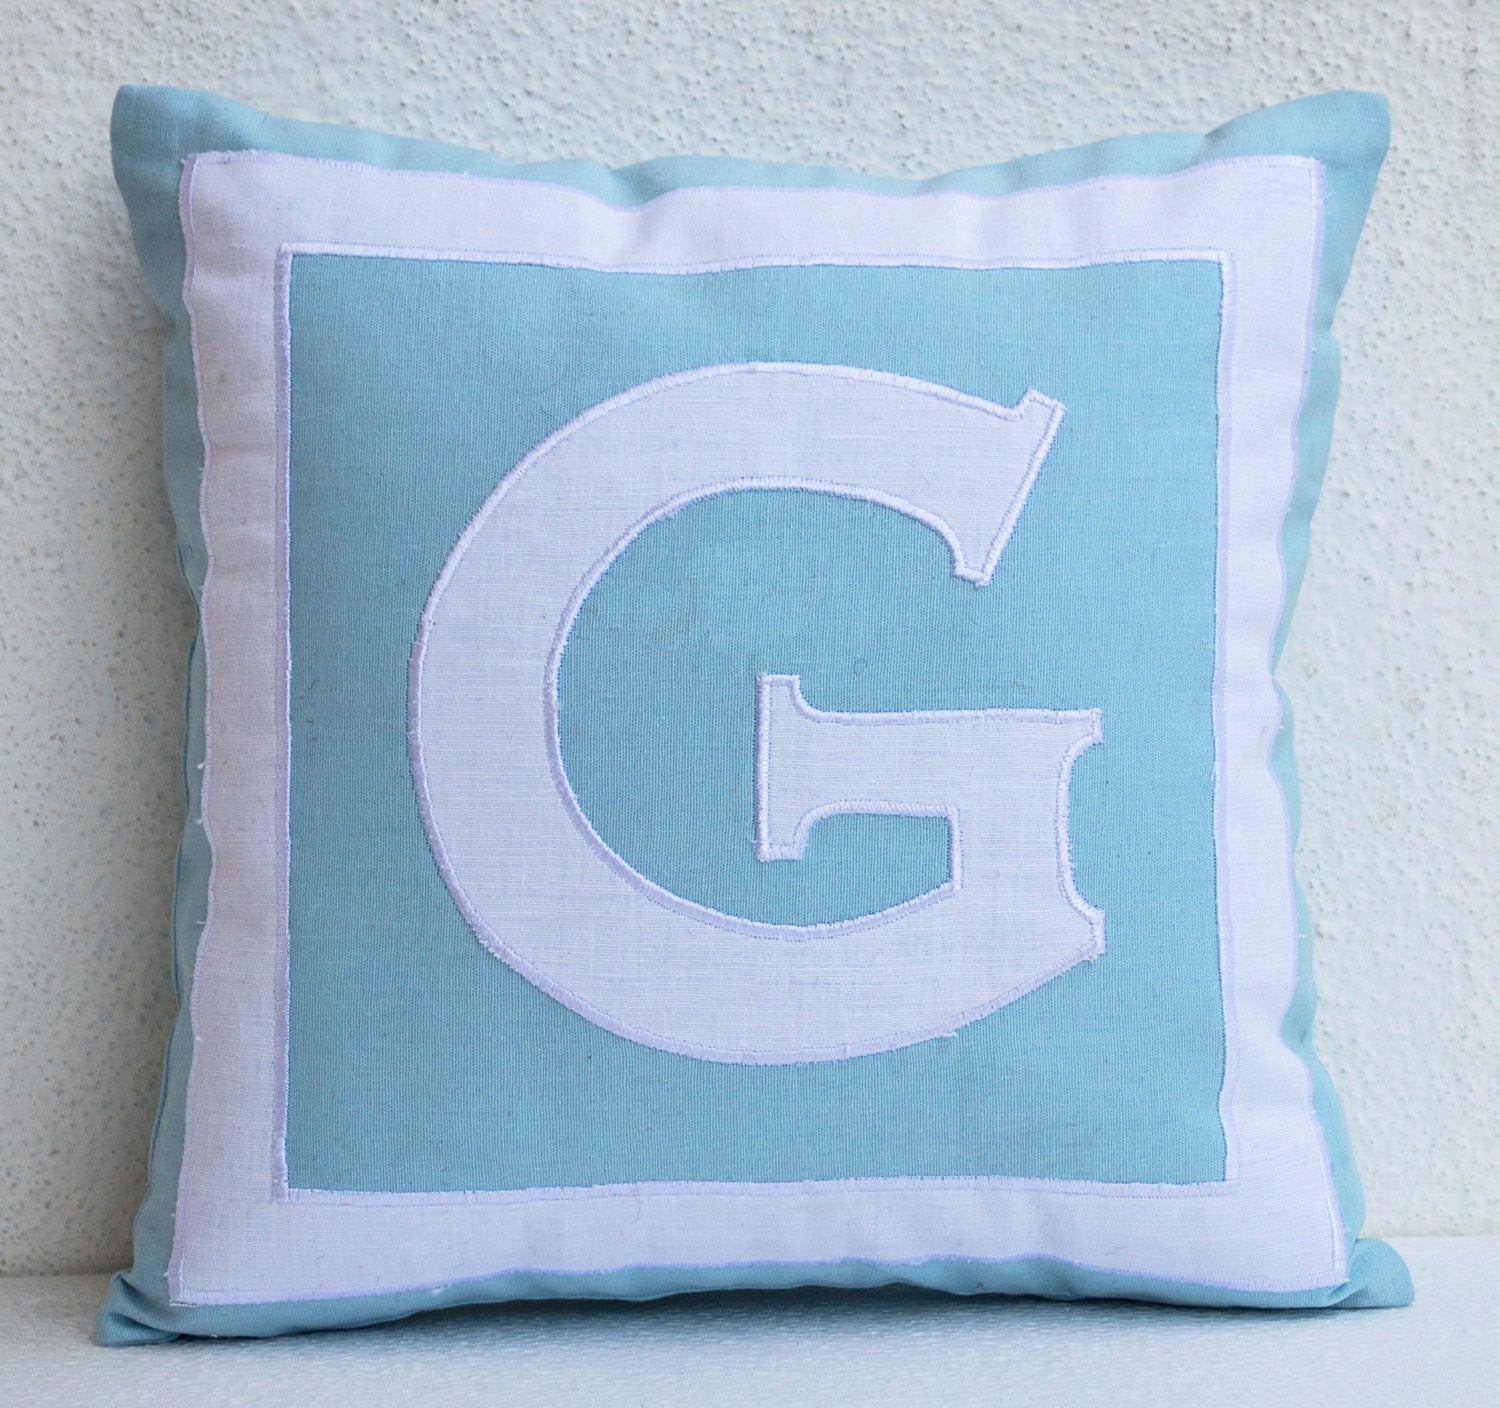 Handmade pillow covers with custom monogram, dorm pillow cover